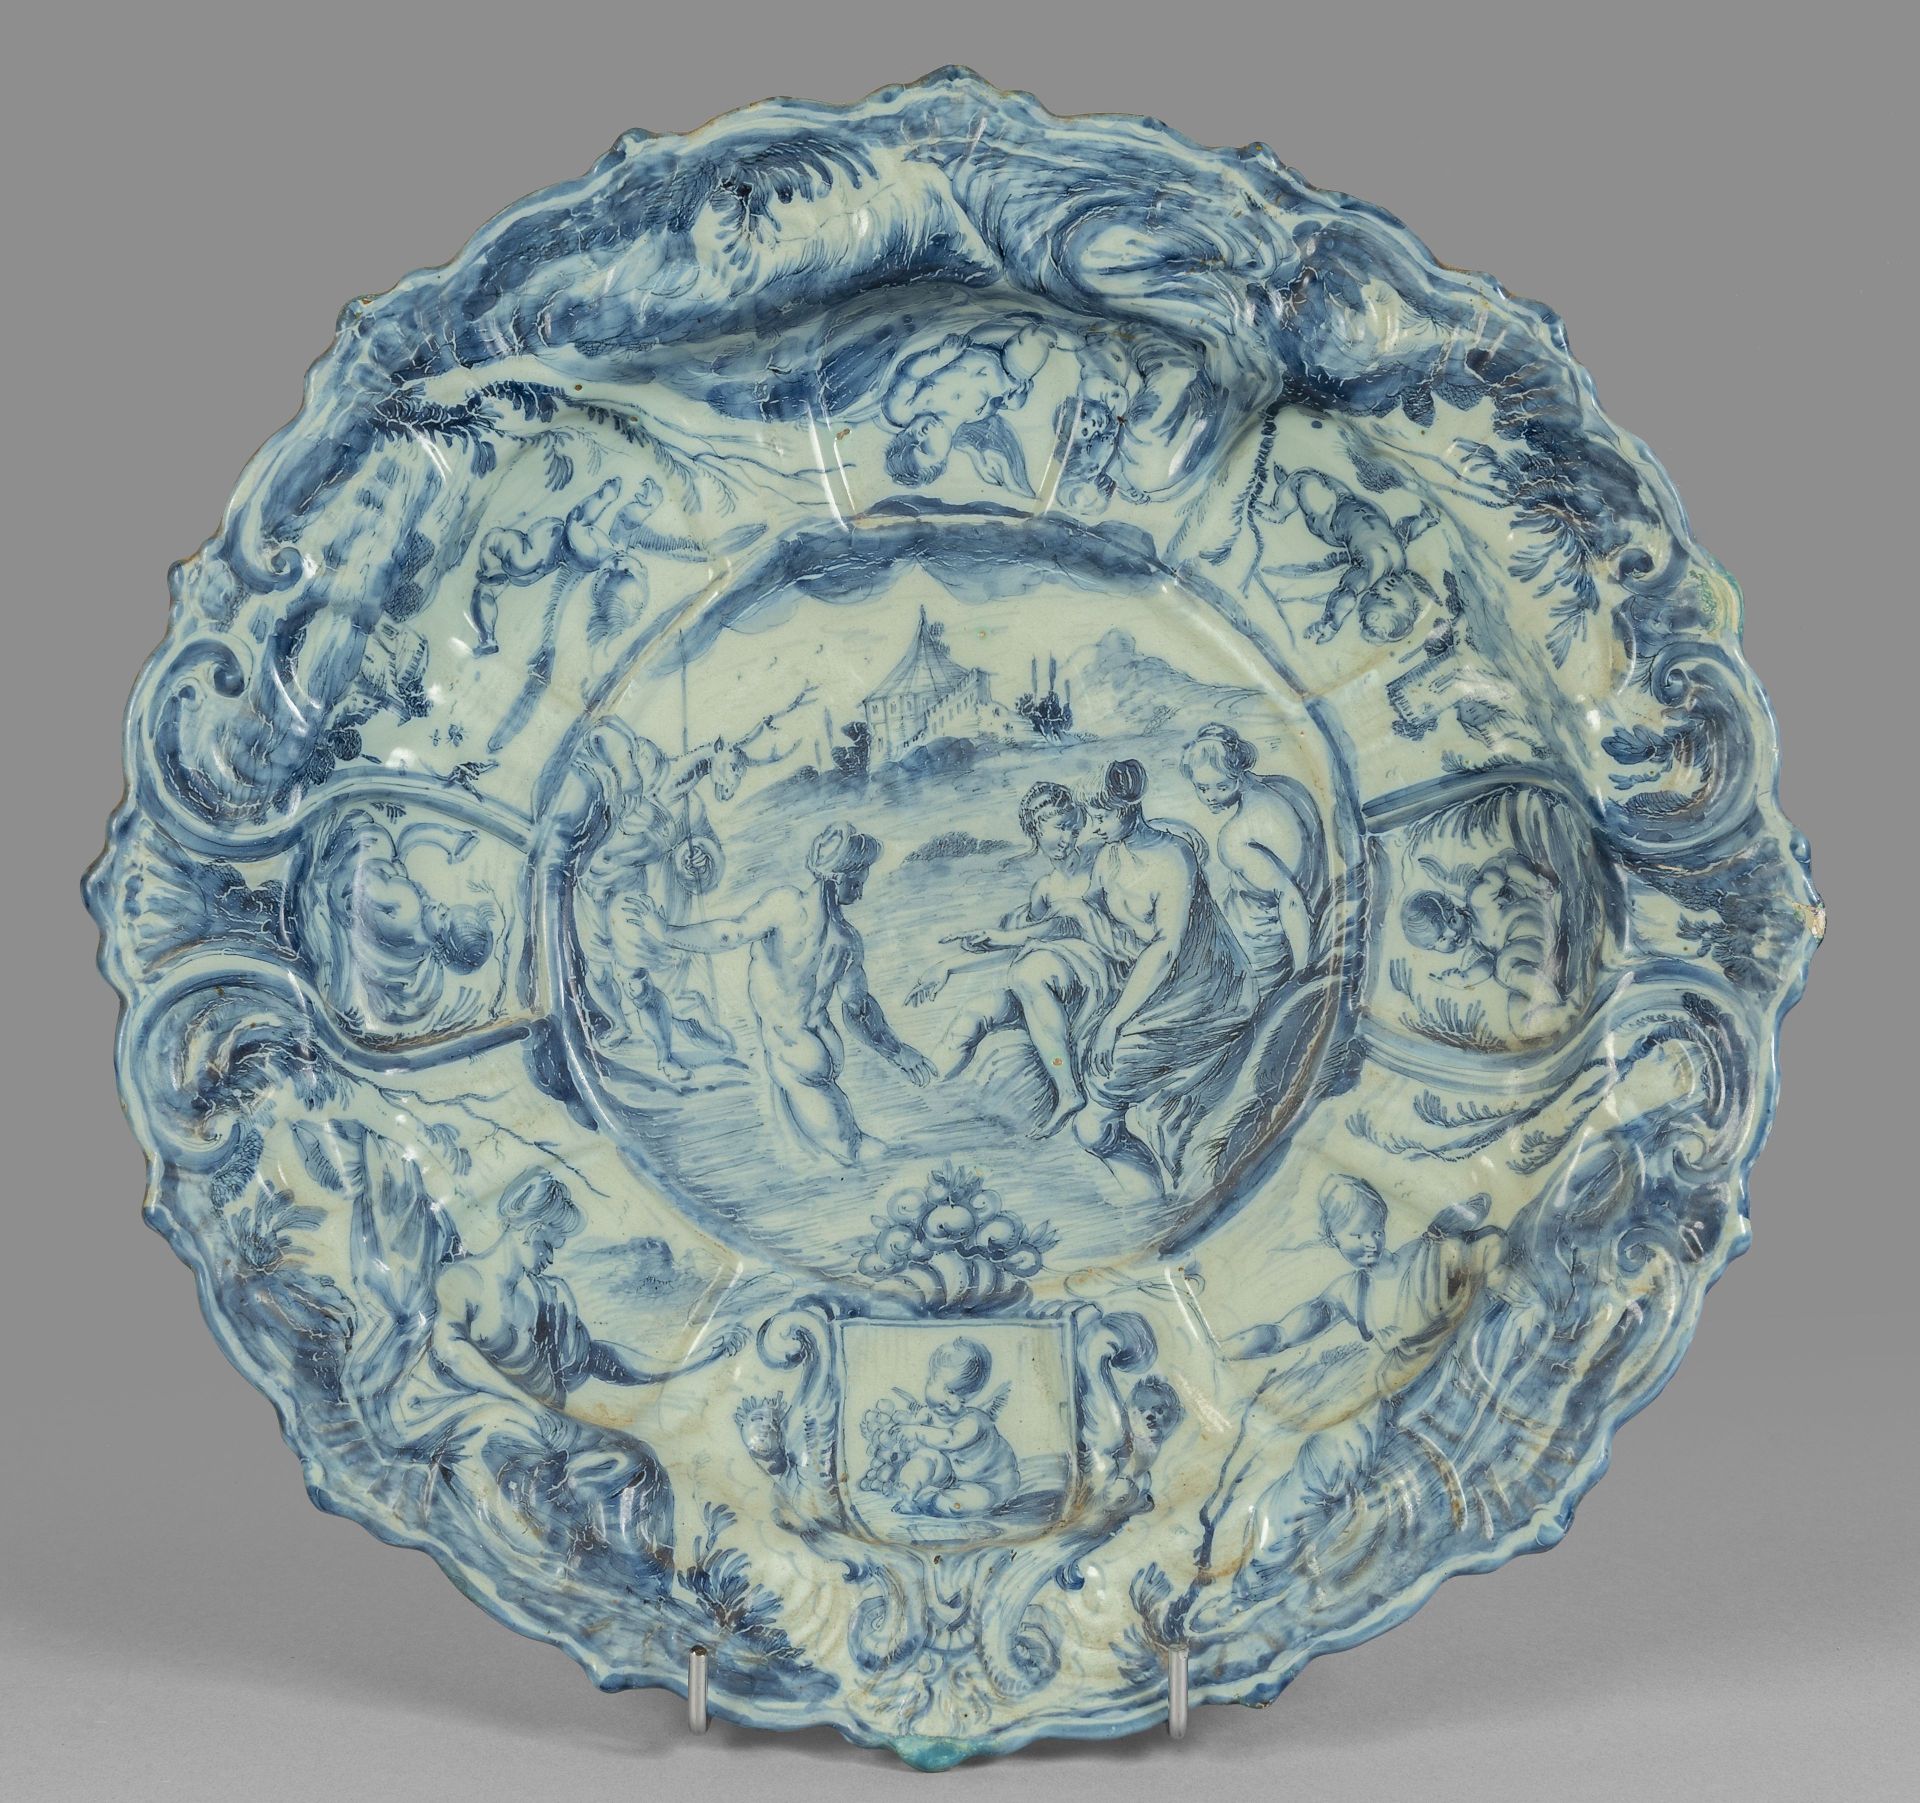 OGGETTISTICA 可移动的陶瓷巡游盘，装饰有卡维托中心的古典场景 17世纪末萨沃纳
直径44厘米